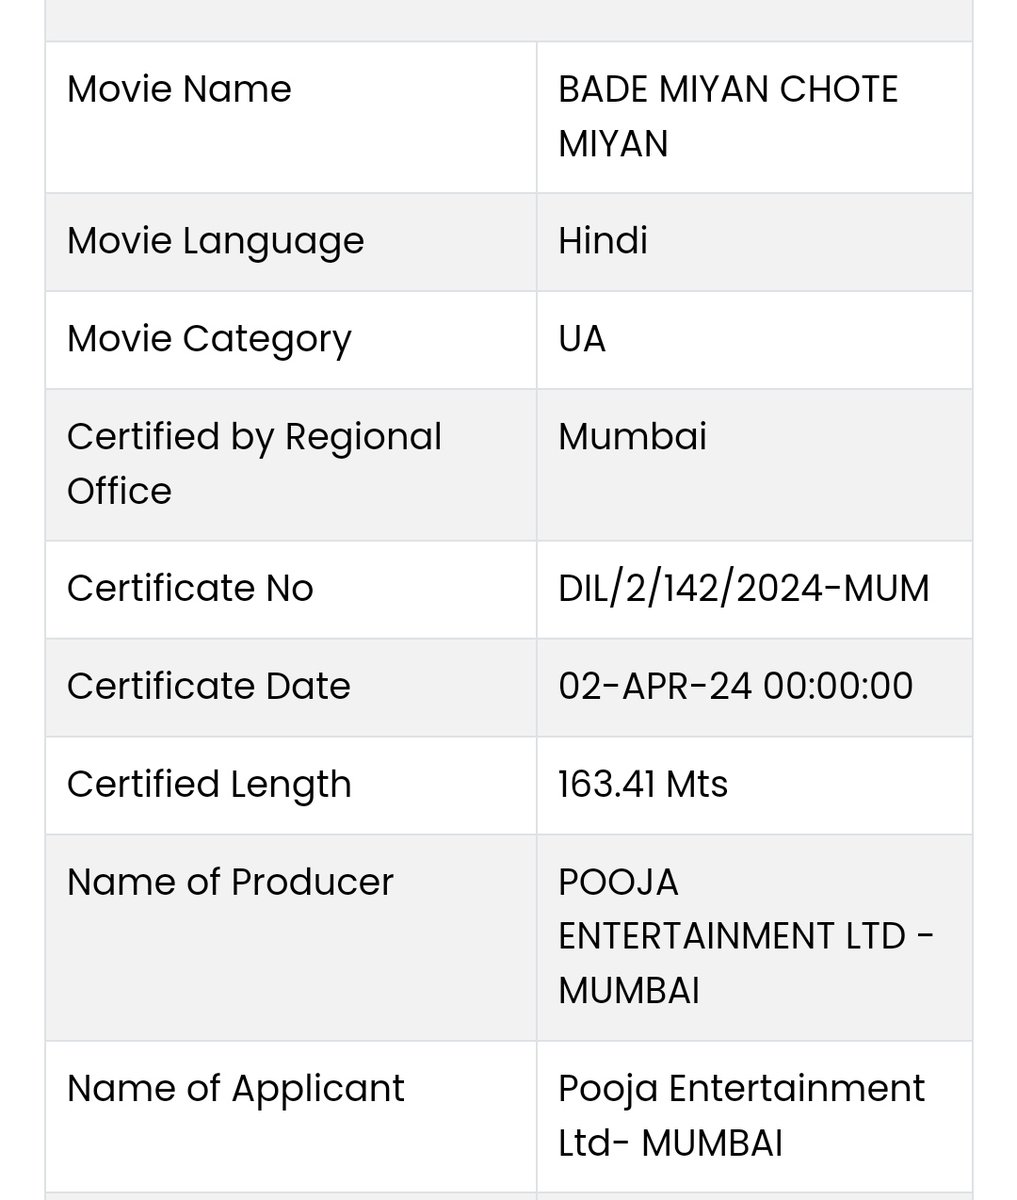 #BadeMiyanChoteMiyan has been certified by CBFC today with UA certification with a length of 164 minutes. 

#AkshayKumar𓃵
#AkshayKumar 
 #TigerShroff  #PrithvirajSukumaran